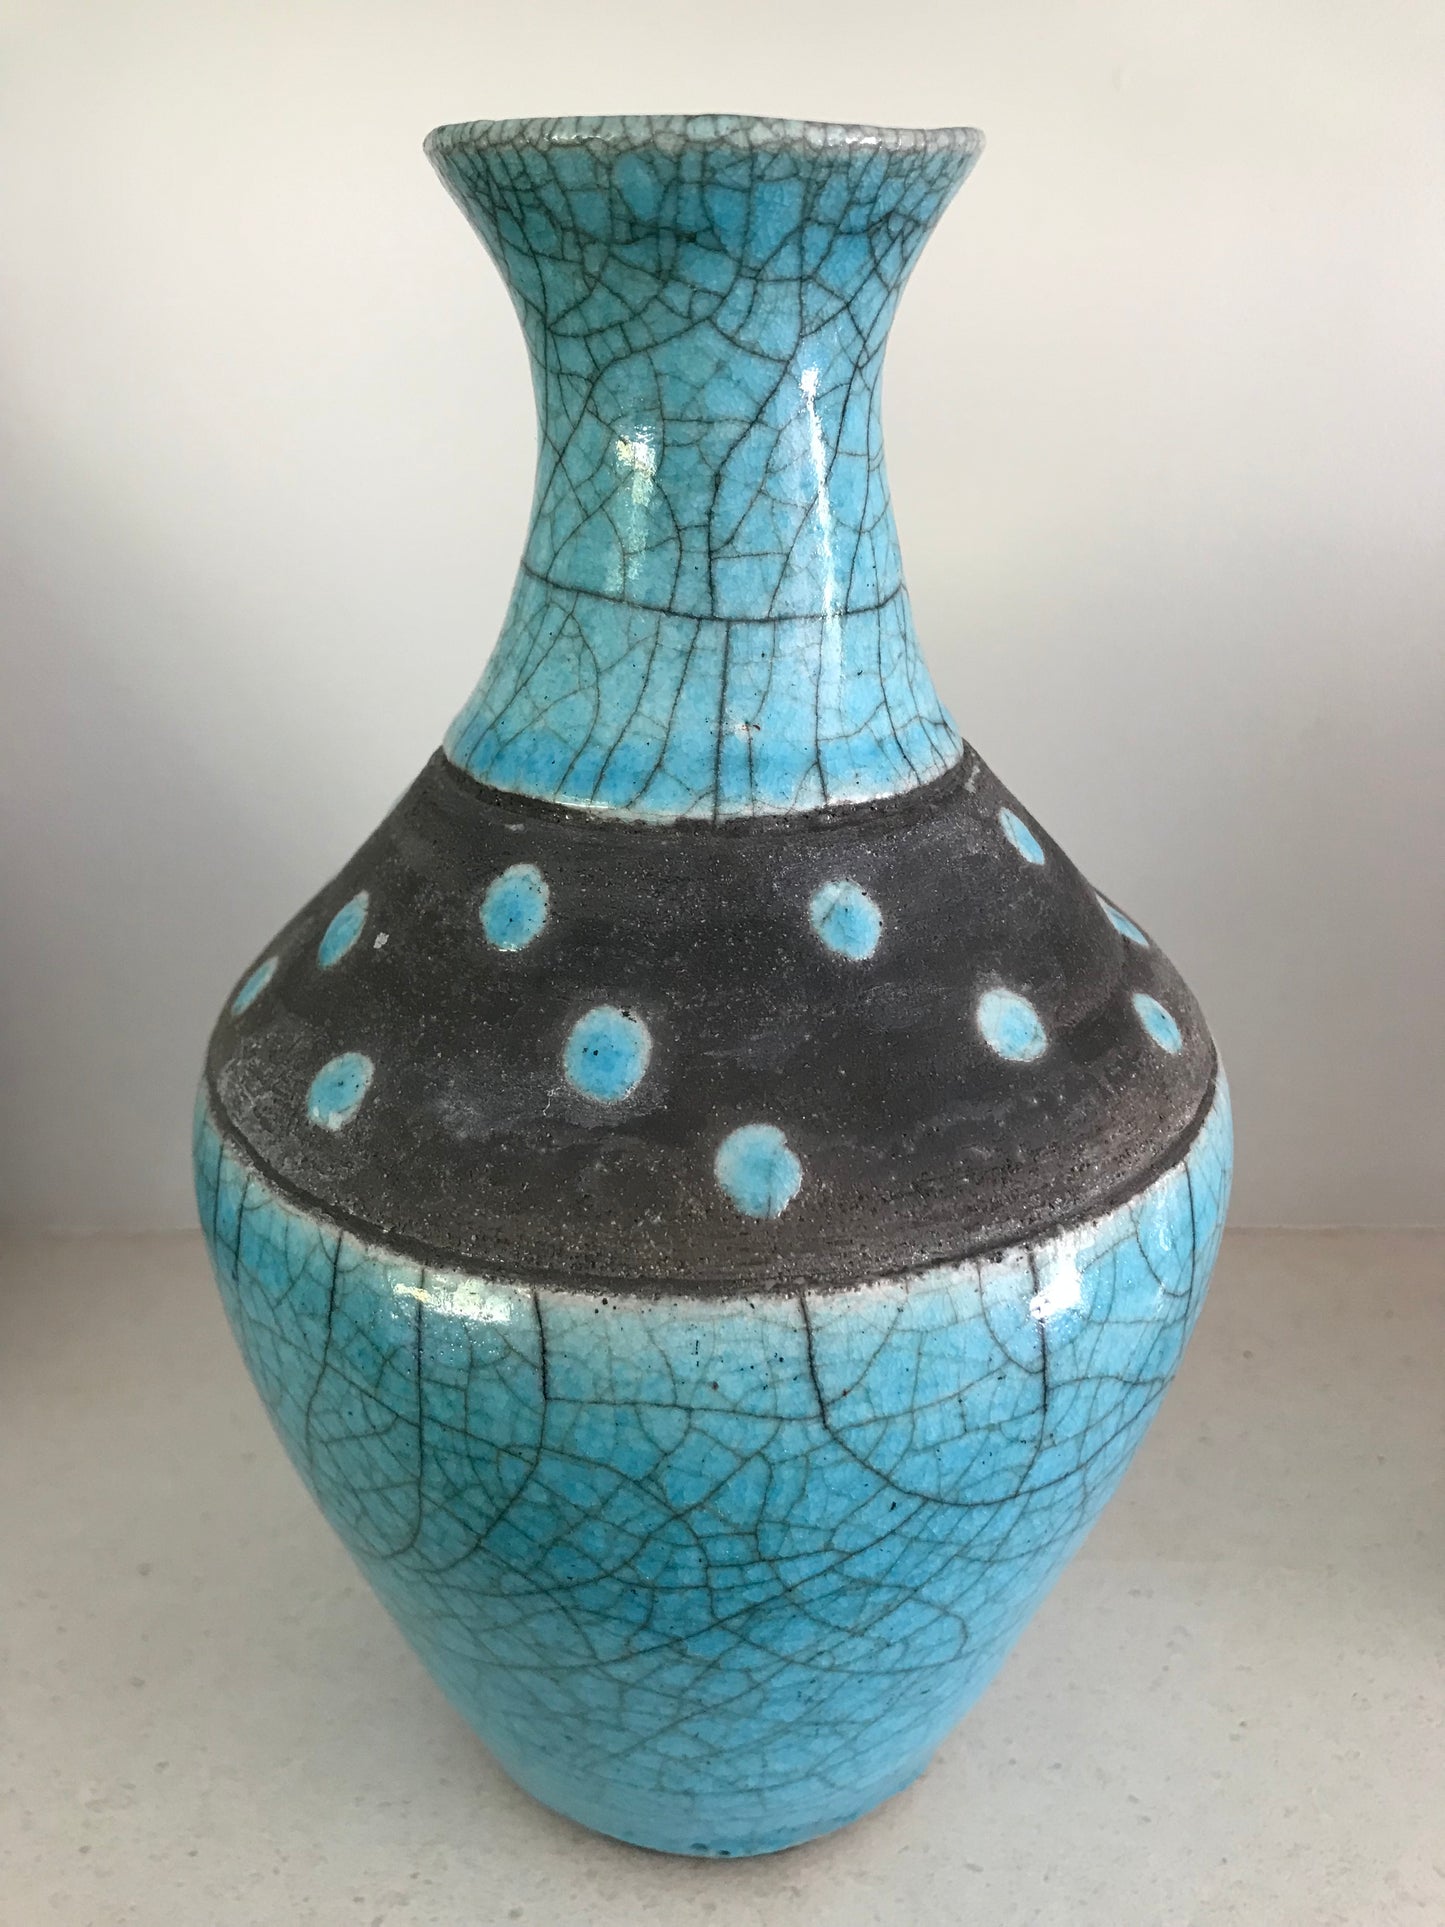 Turquoise polkadot vase